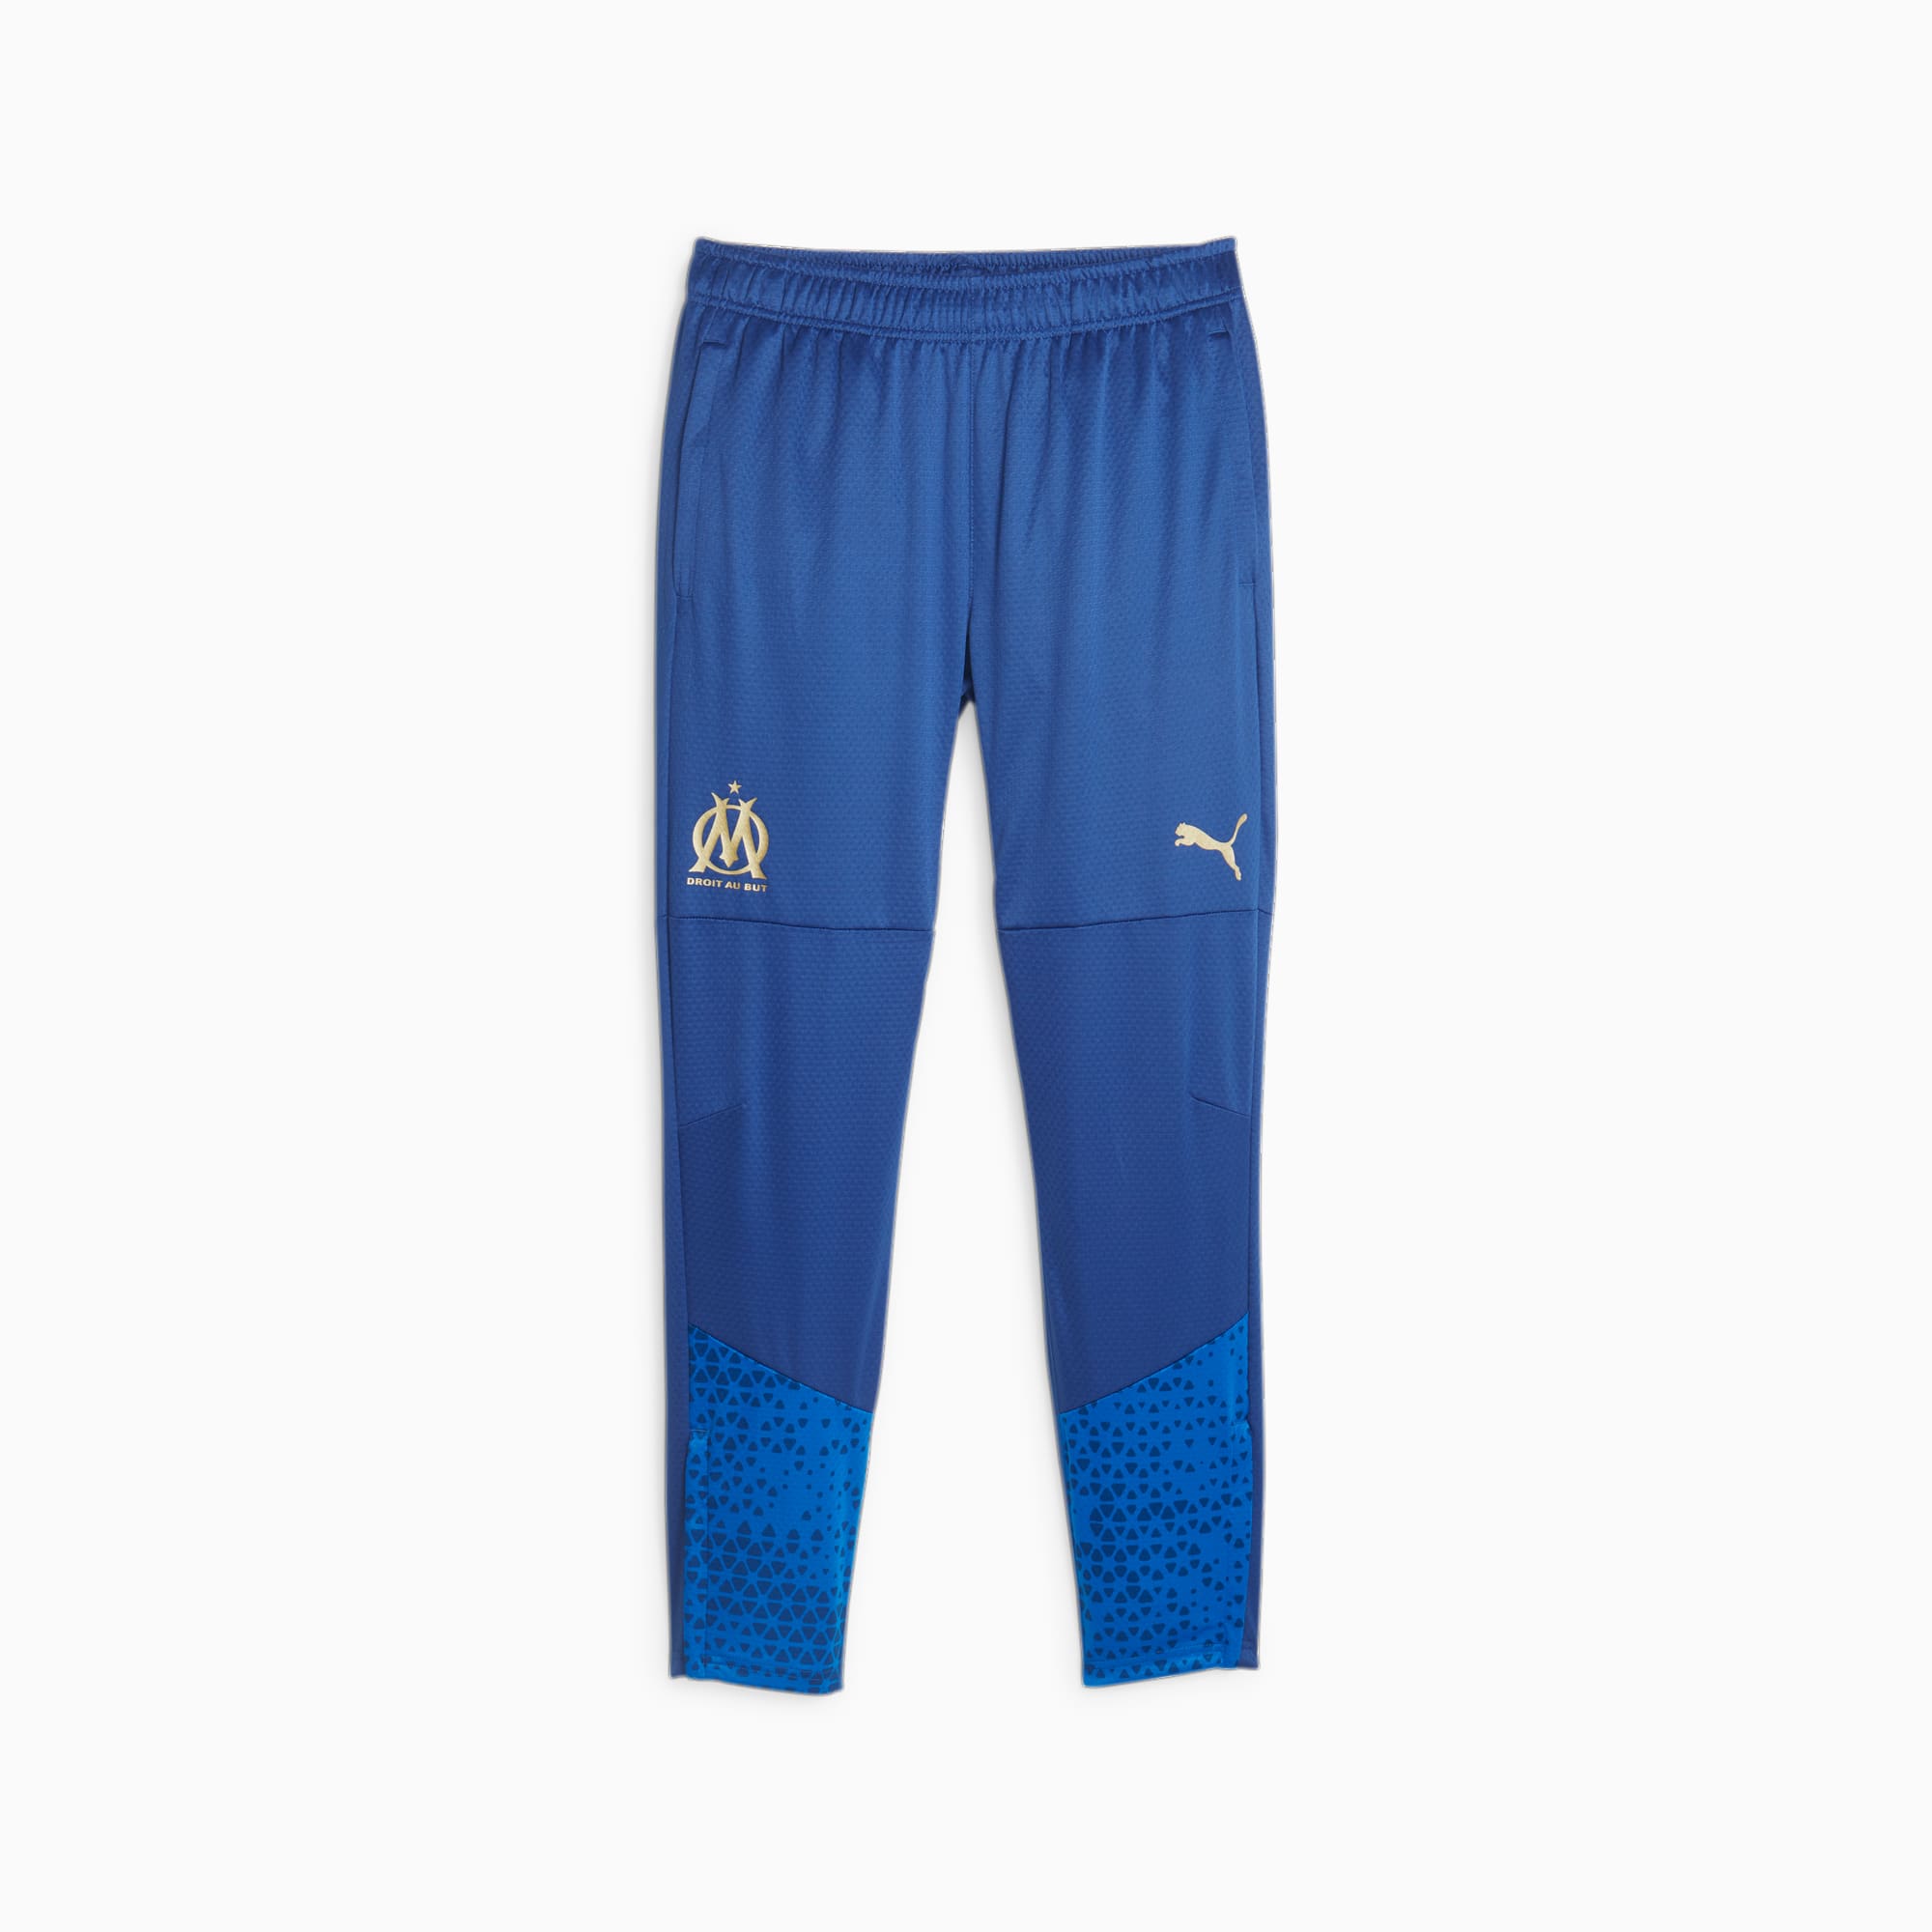 Men's PUMA Olympique De Marseille Football Training Pants, Royal Blue